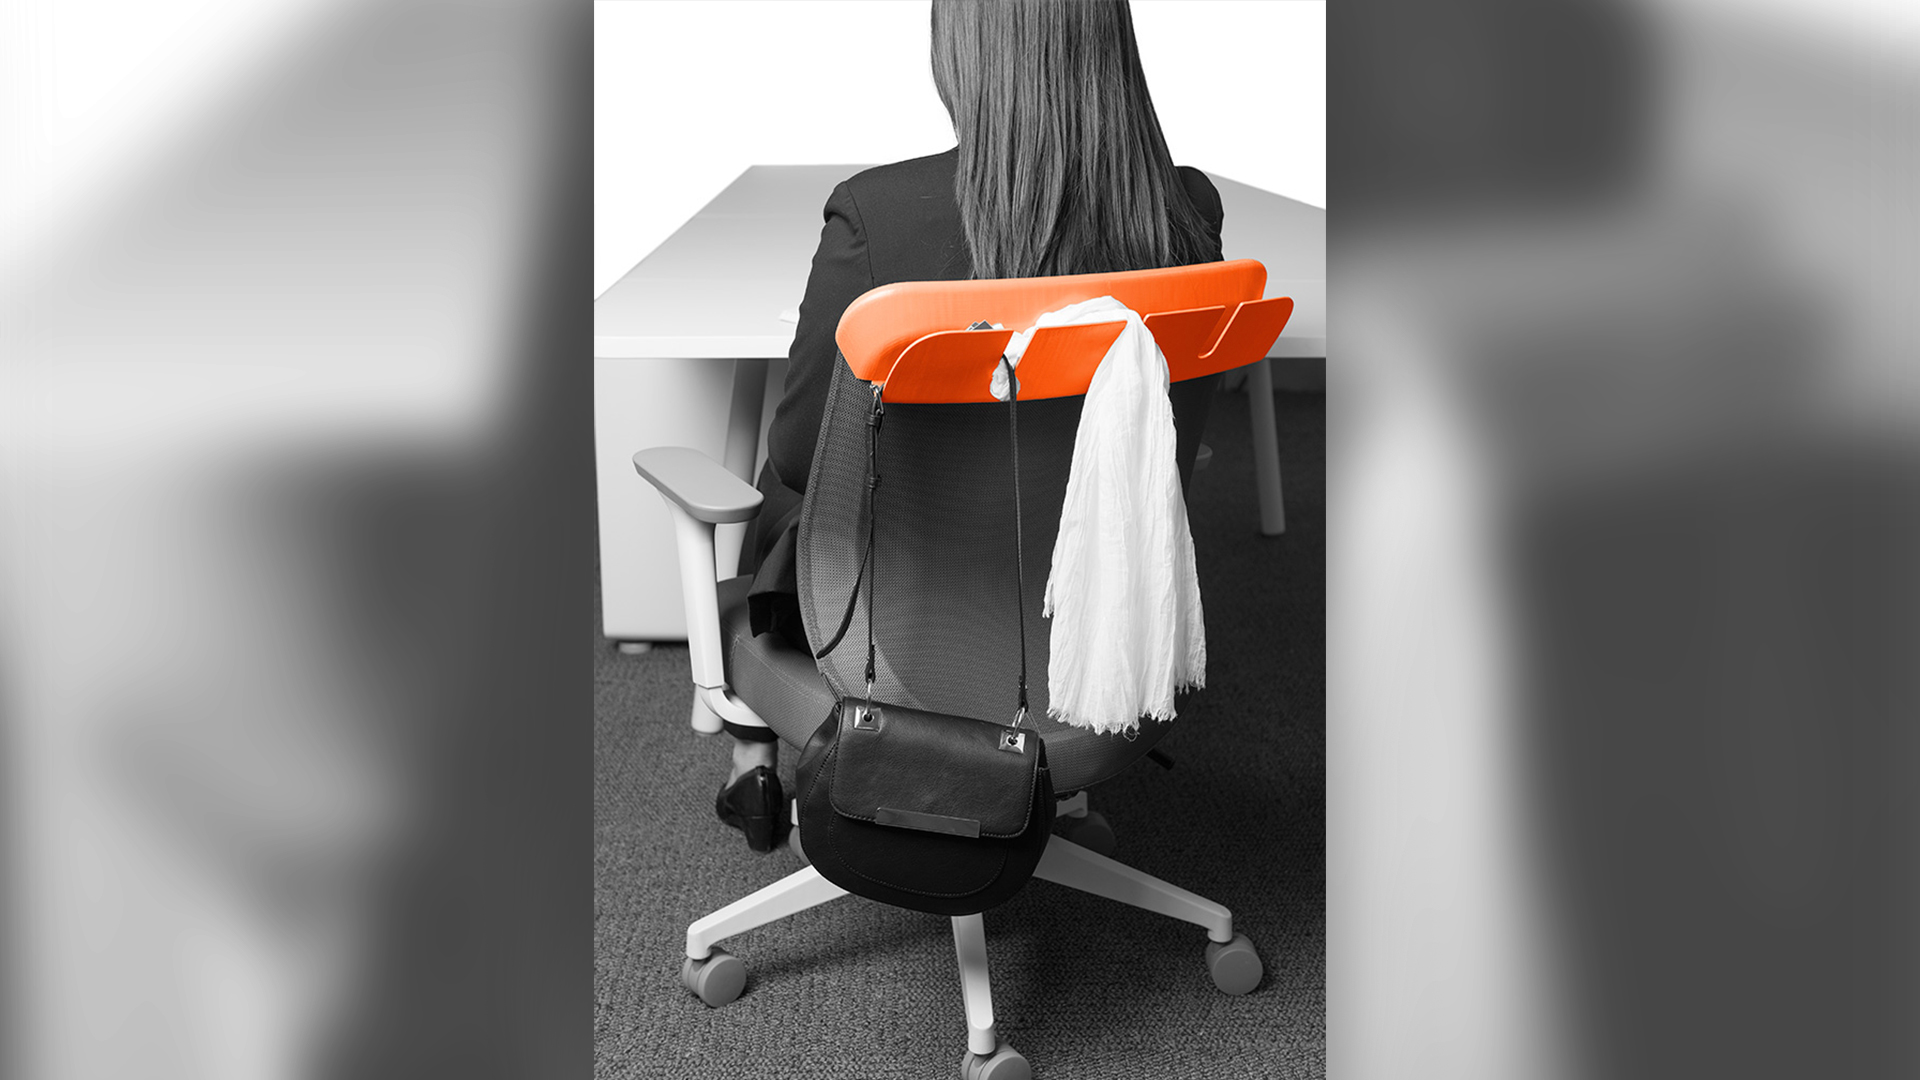 Desk chair overhang with slits for hanging scarf and handbag